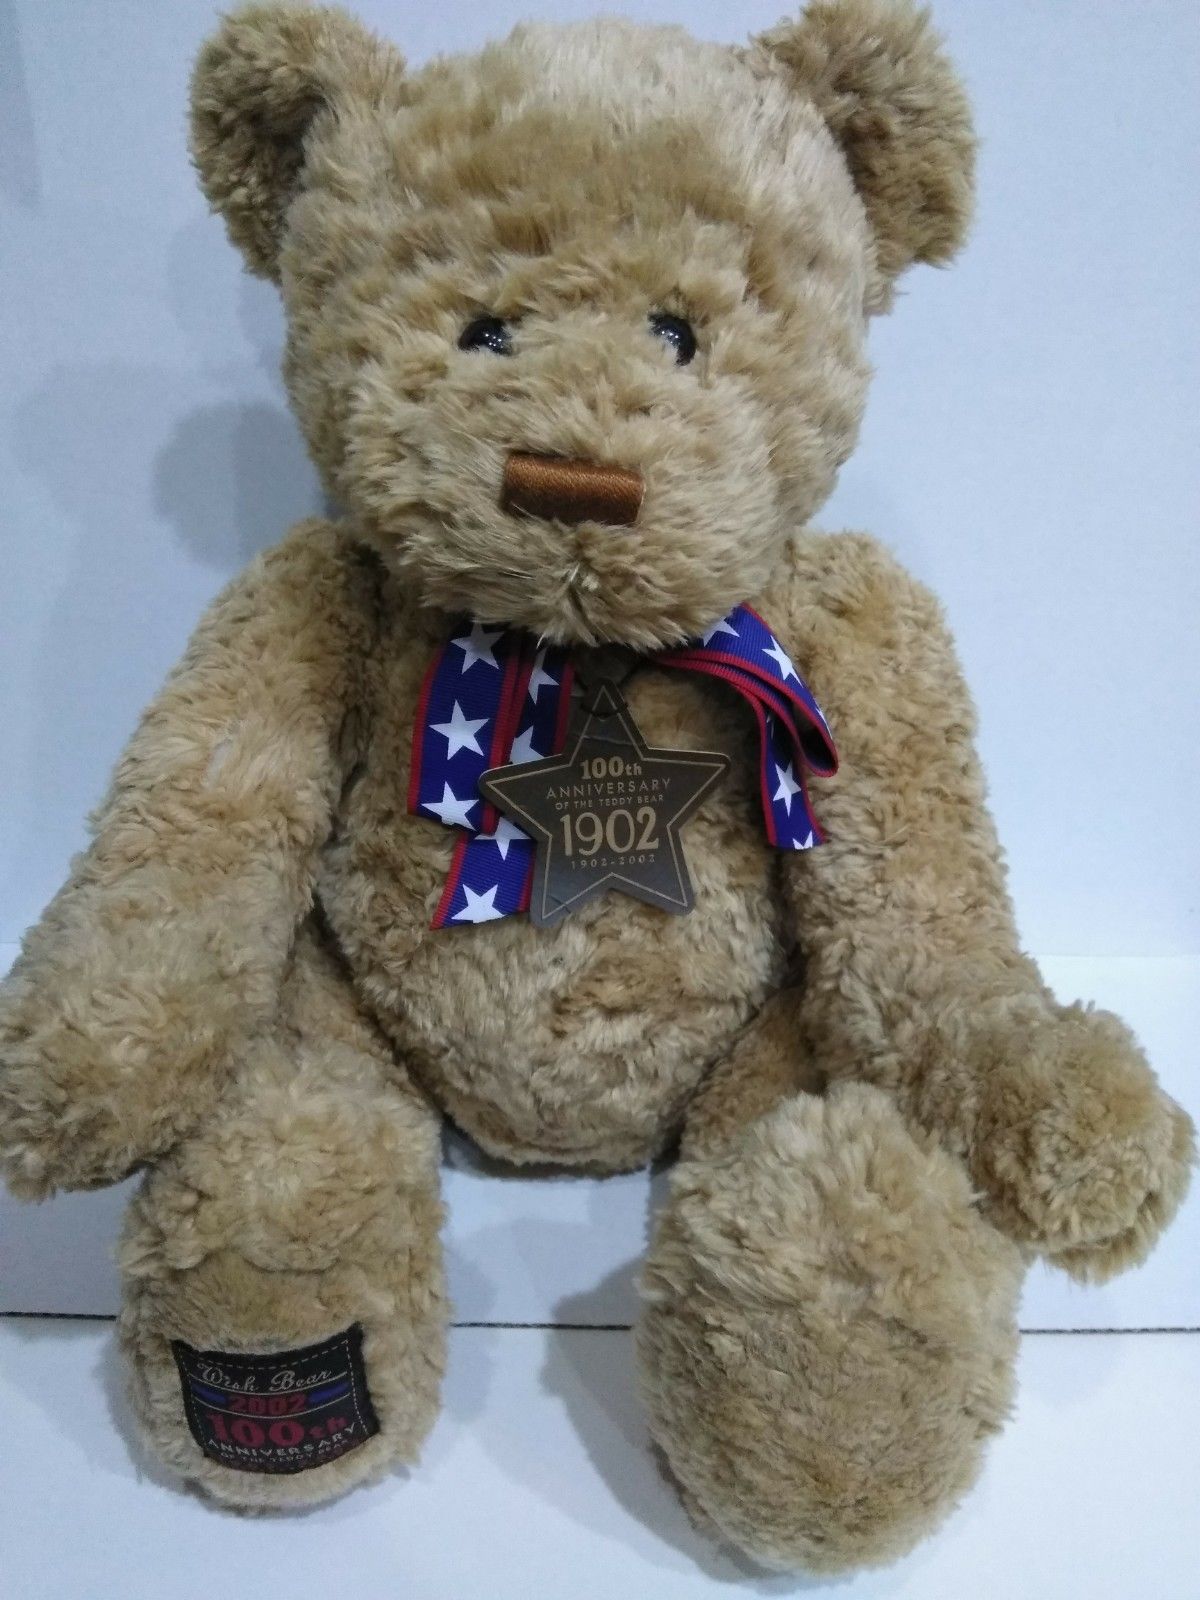 GUND Wish Bear 100th Anniversary of 1902 Teddy Bear 2002 26